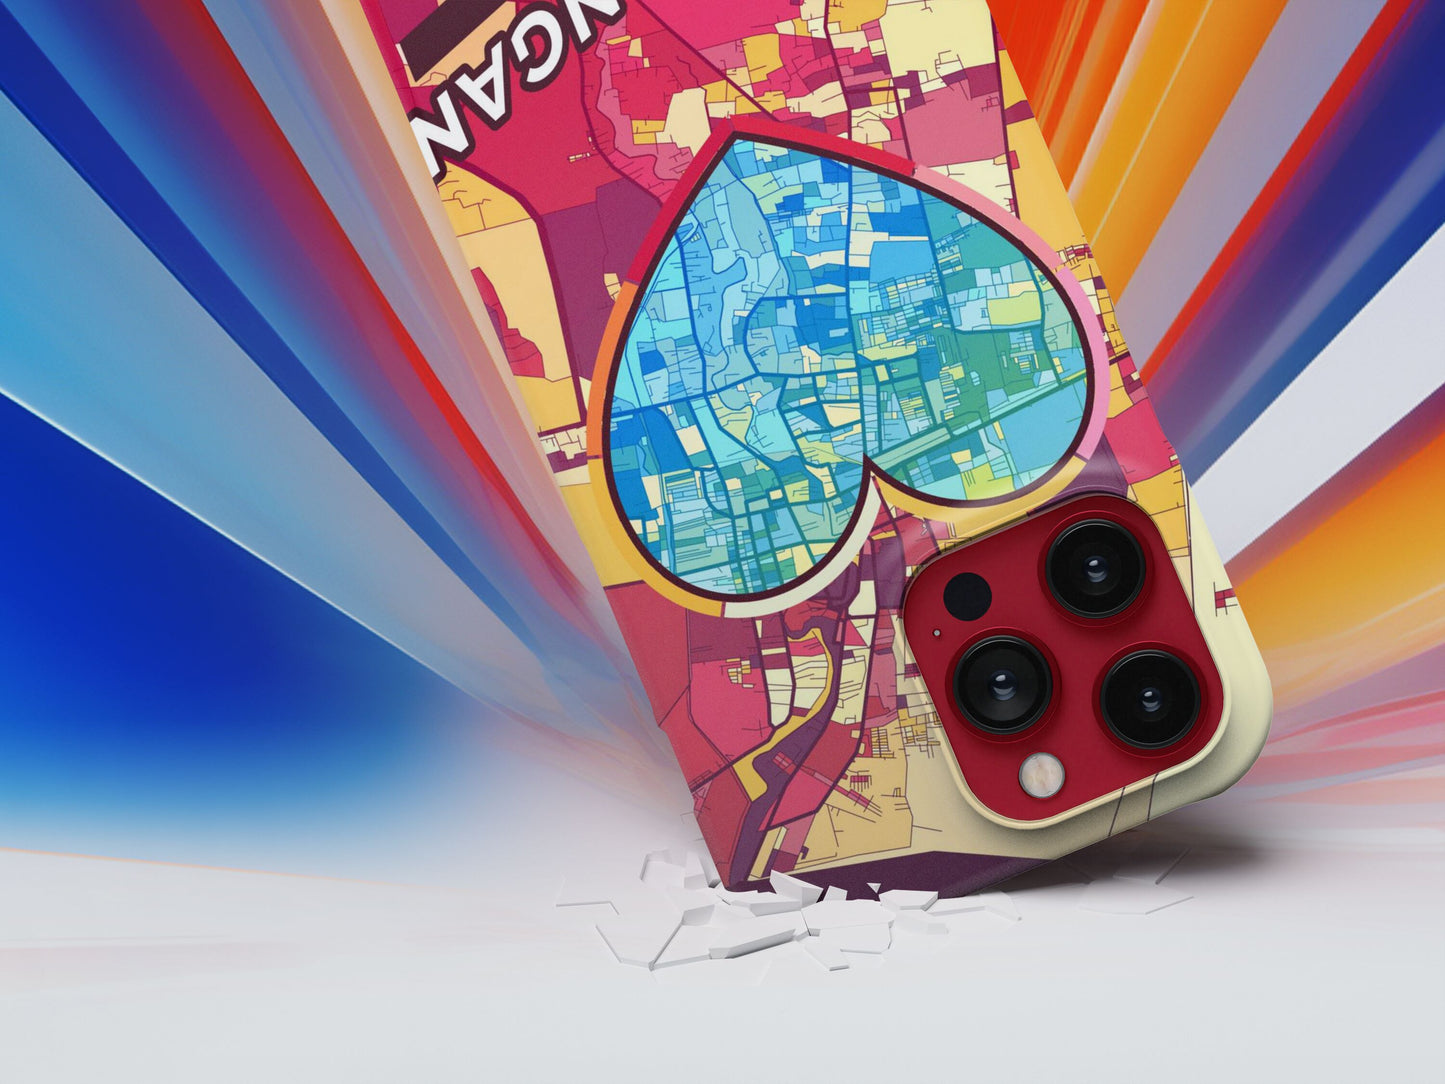 Pekalongan Indonesia slim phone case with colorful icon